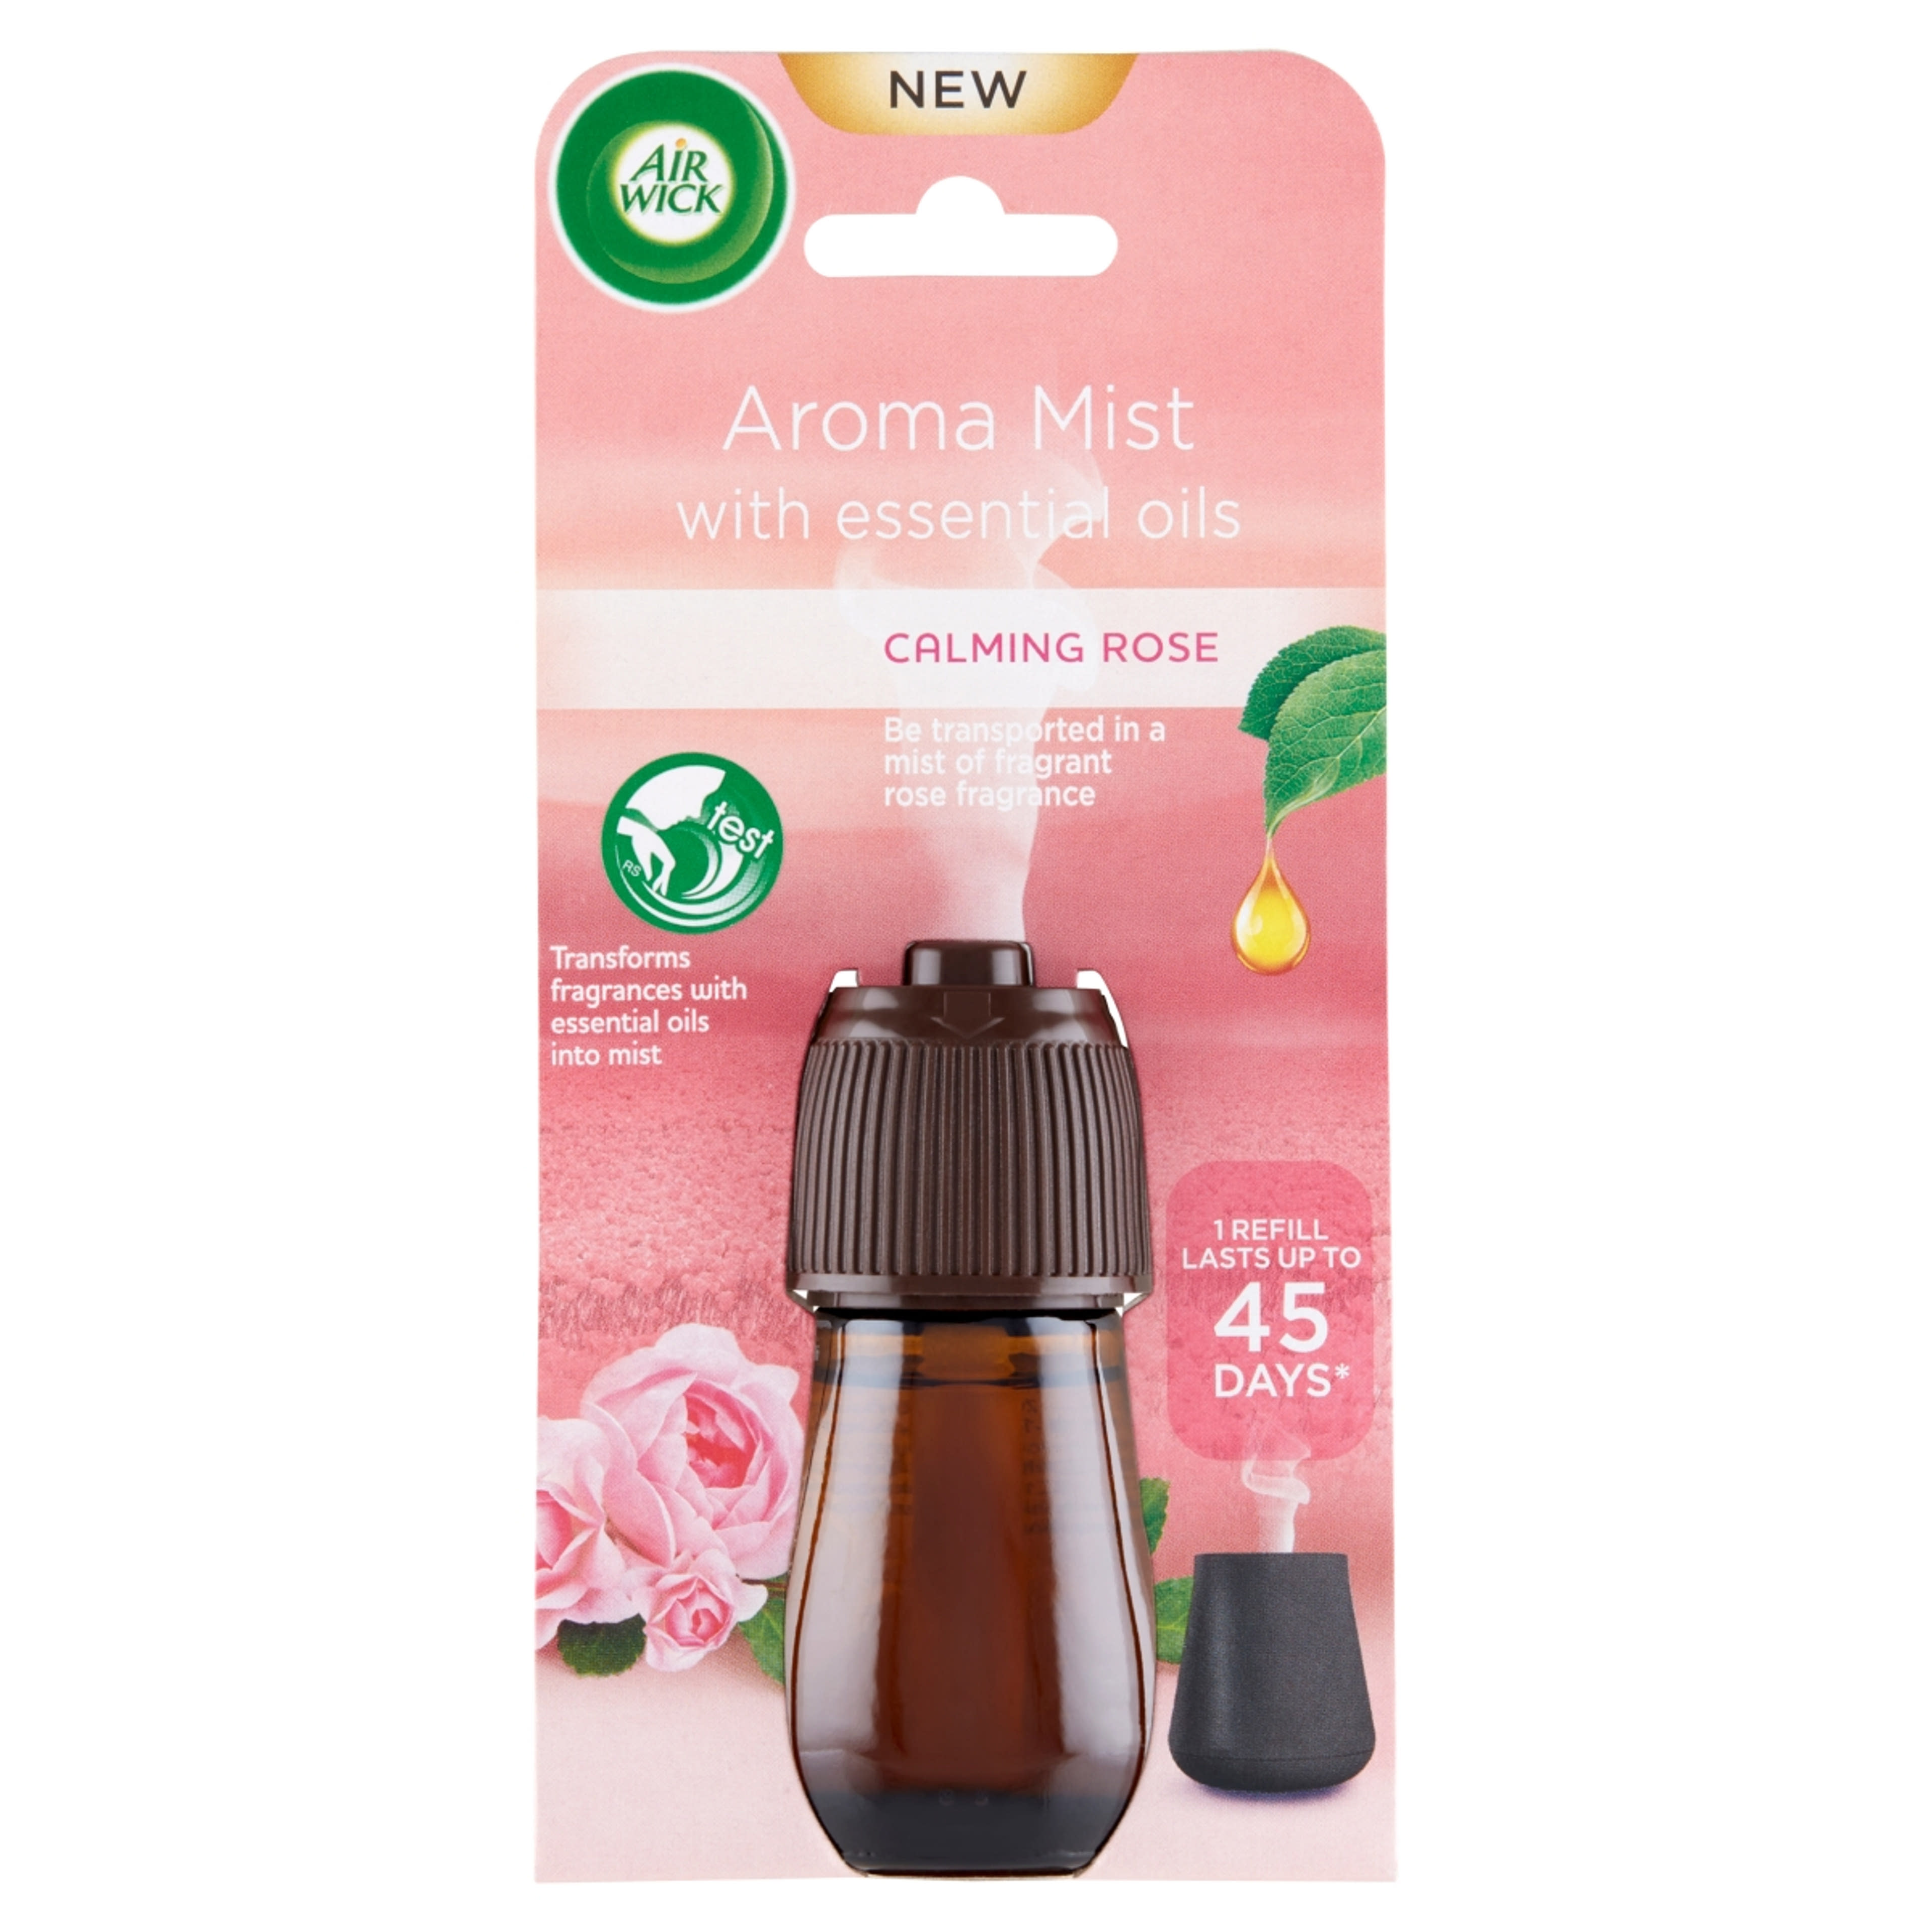 Air Wick Aroma Mist Nyugtató rózsa illat aroma diffúzor utántöltő - 20 ml